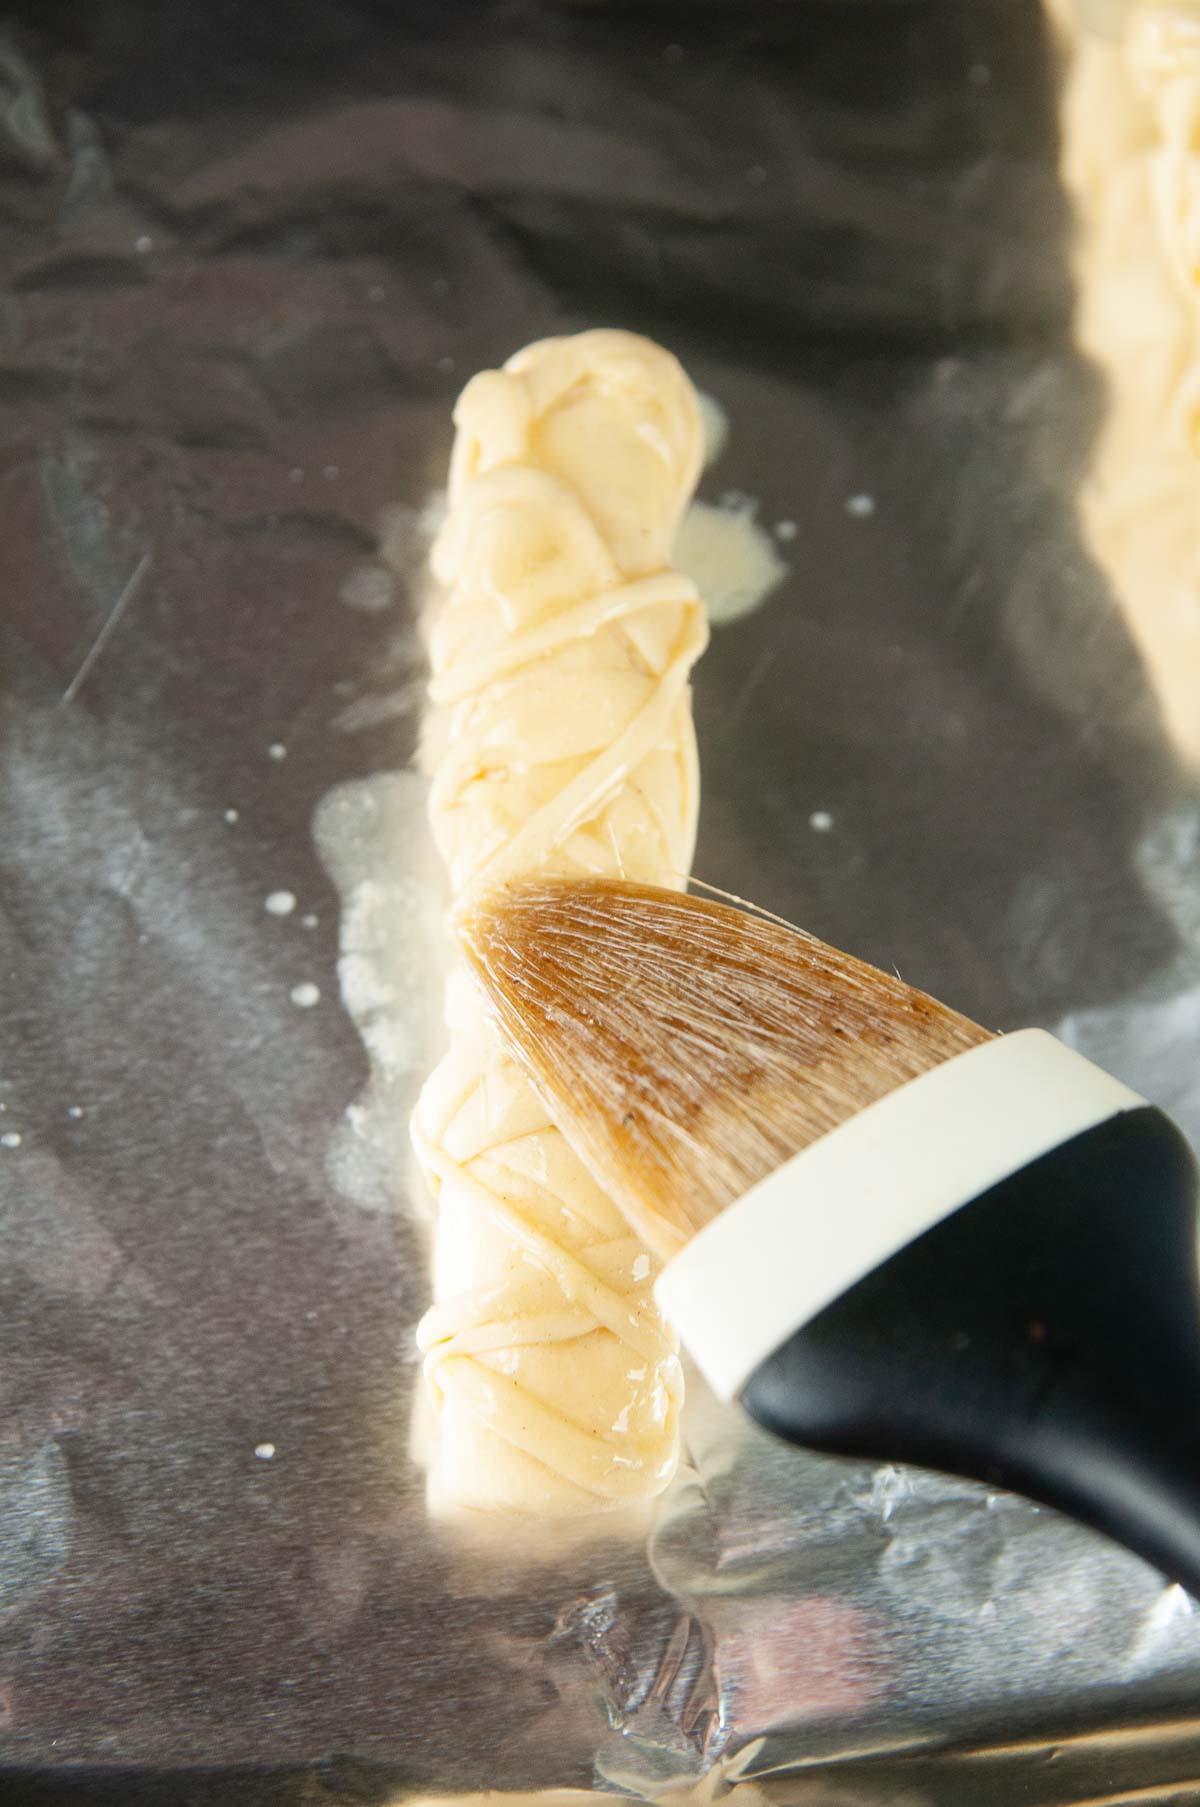 Brush garlic butter onto the dough if desired